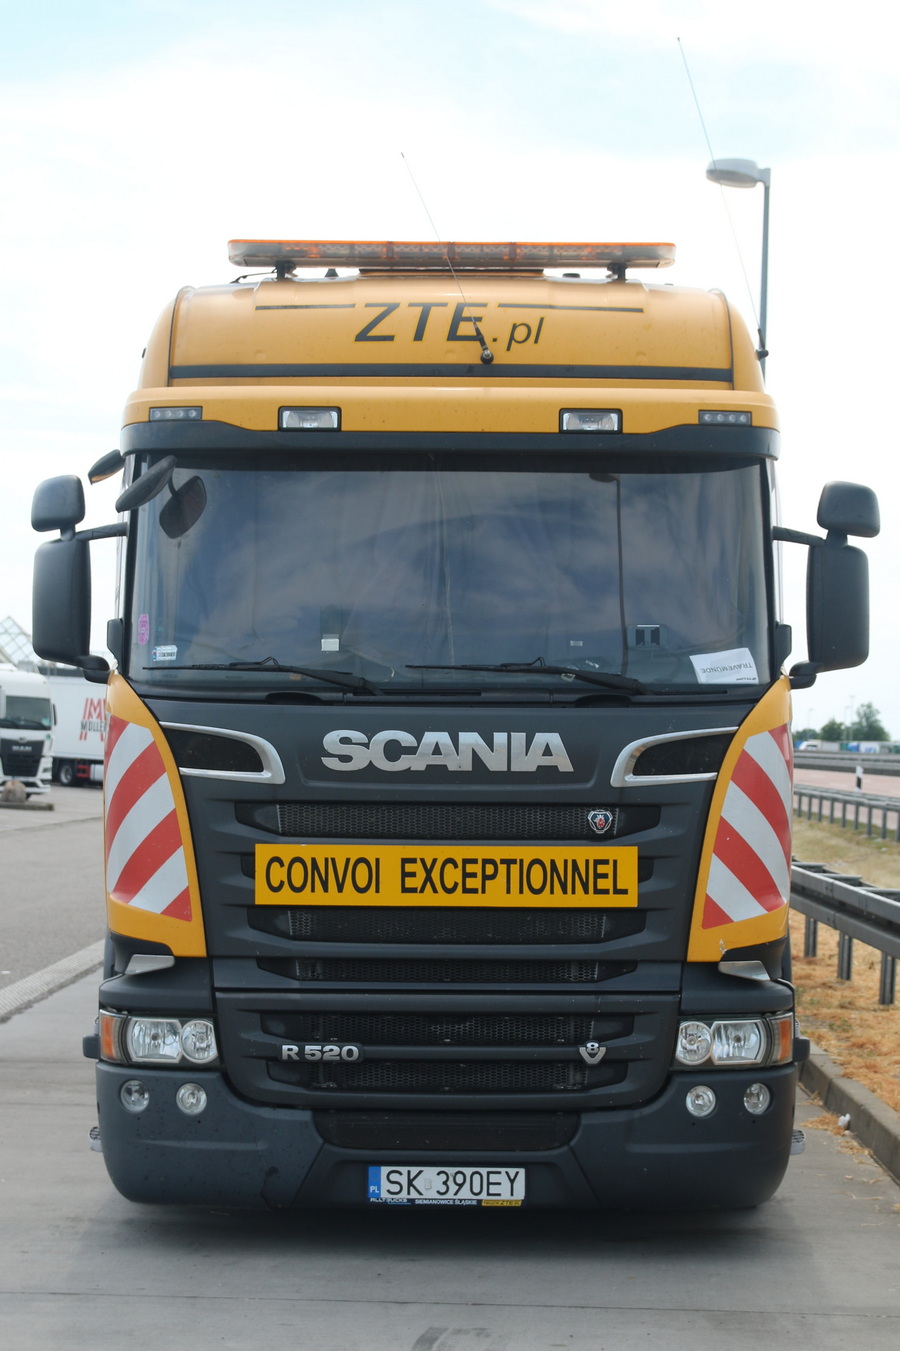 ZTE - Scania R 520 Frontansicht - Copyright: www.olli80.de